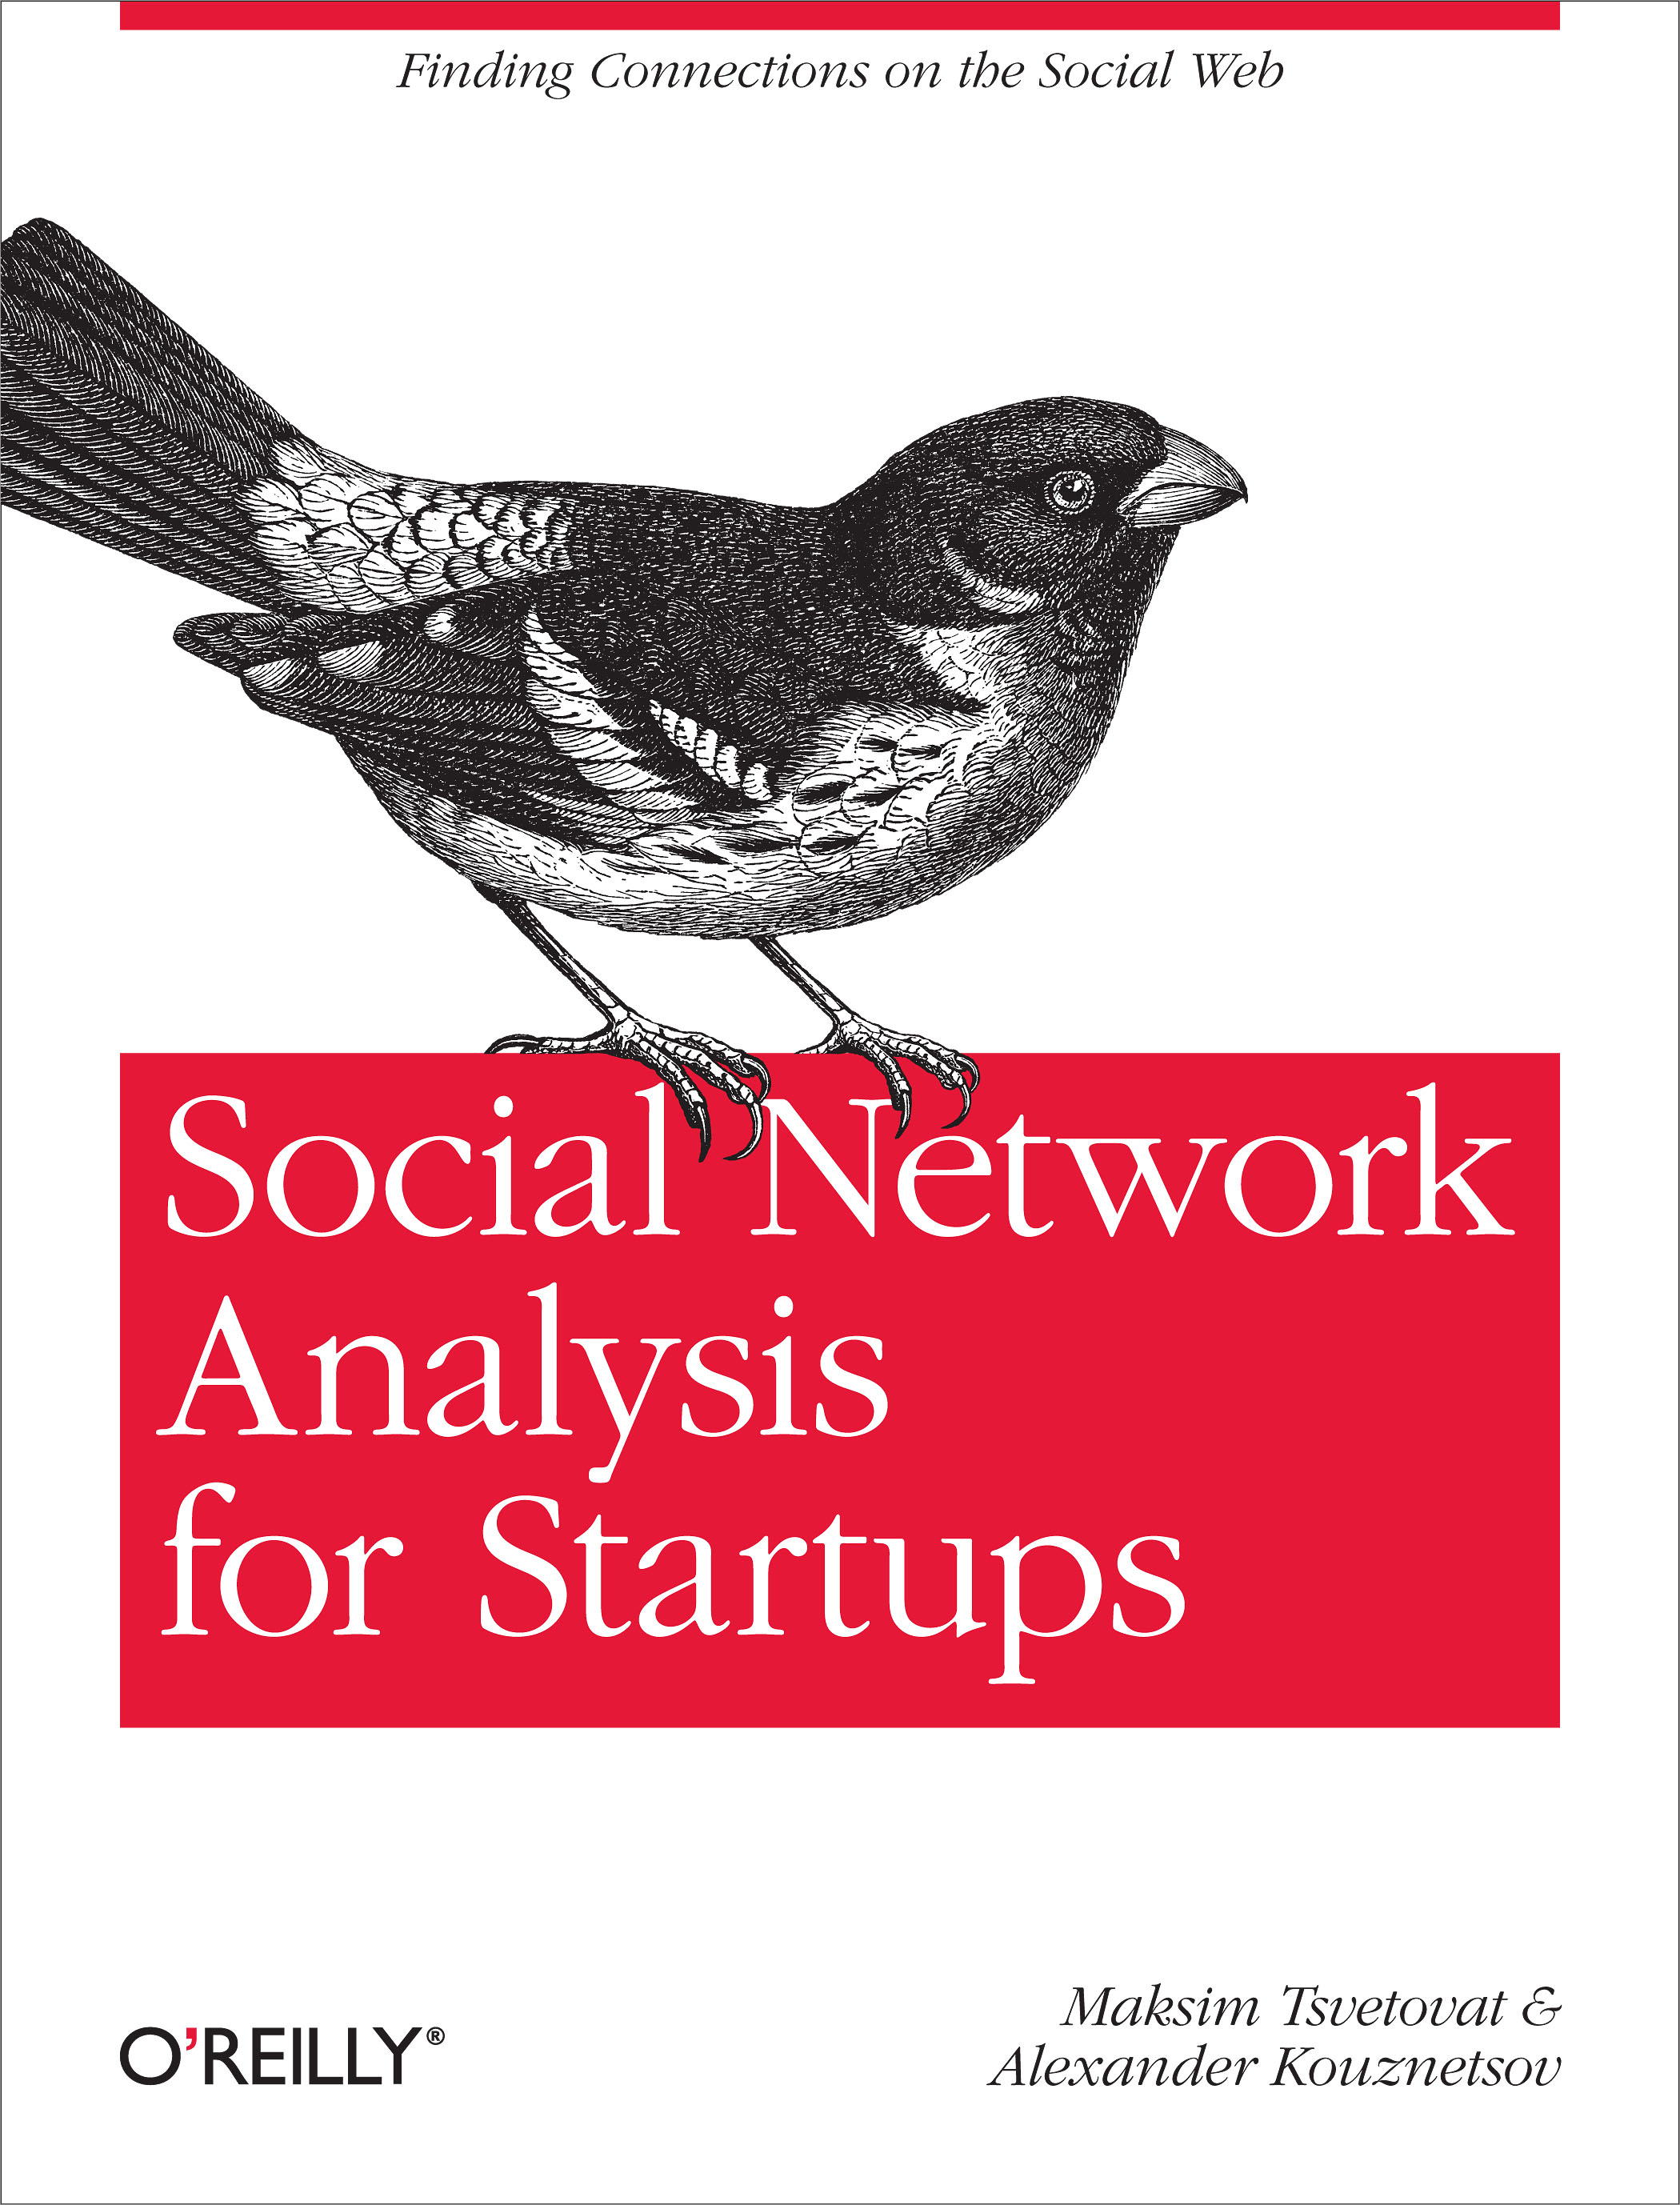 Social Network Analysis for Startups - 15-24.99